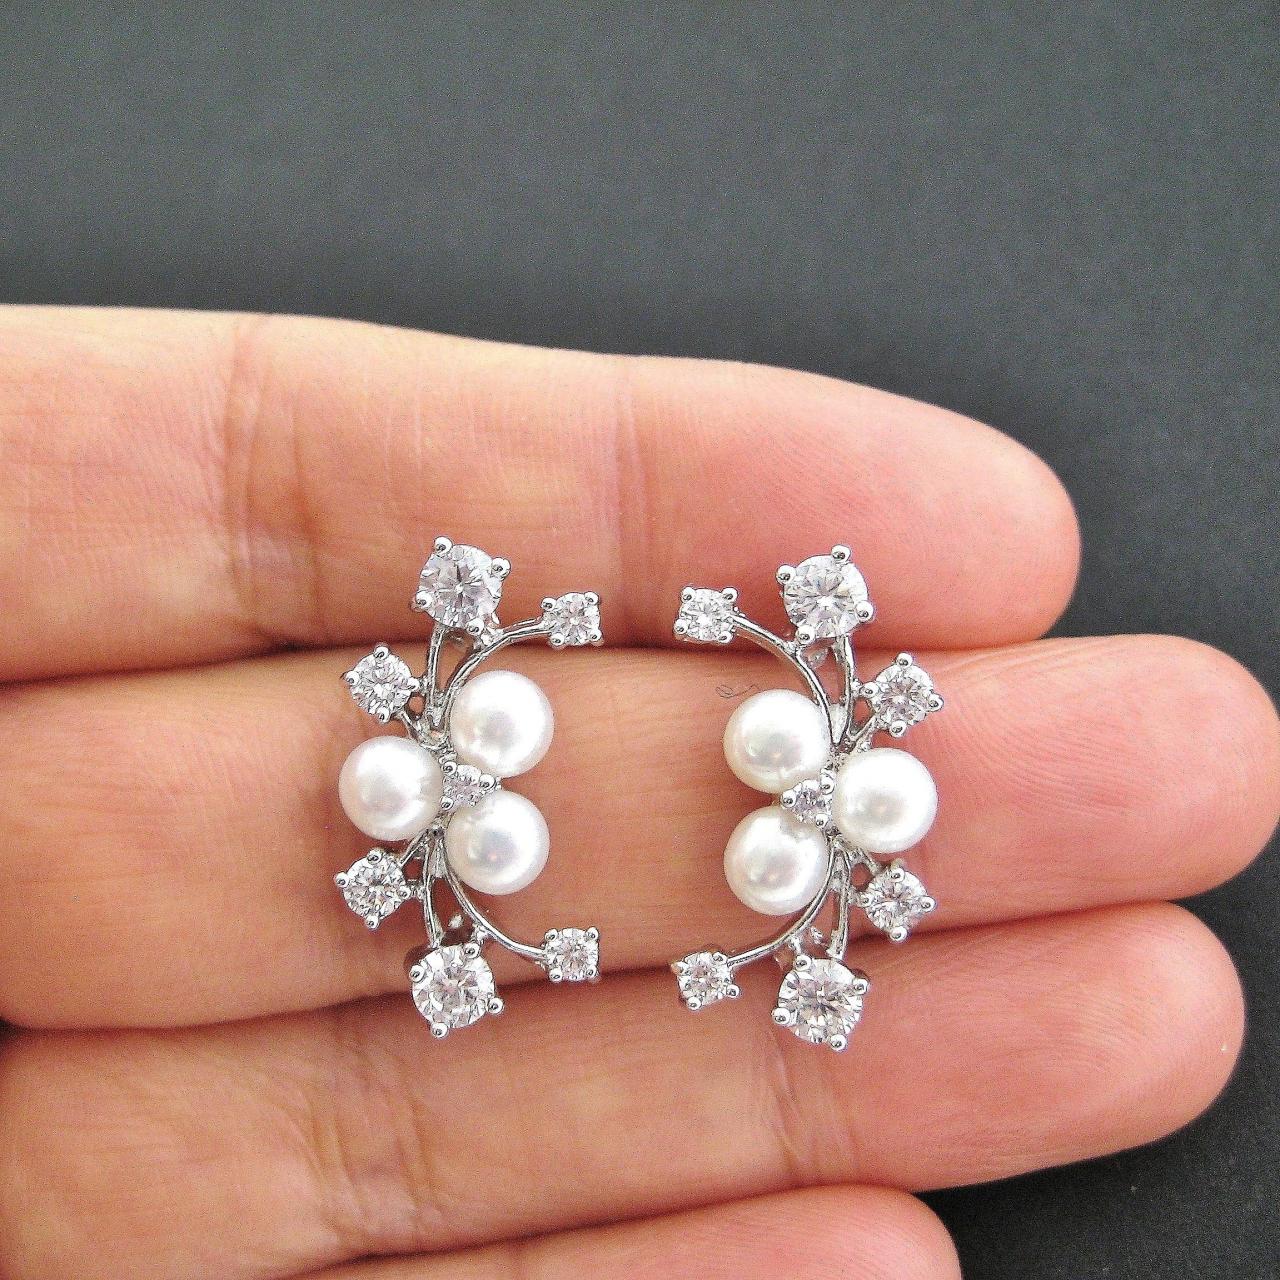 Bridal Pearl Earrings White Freshwater Pearl Wedding Jewelry Cubic Zirconia Multi-stone Earrings Silver Stud Earrings Bridesmaids Gift(e002)